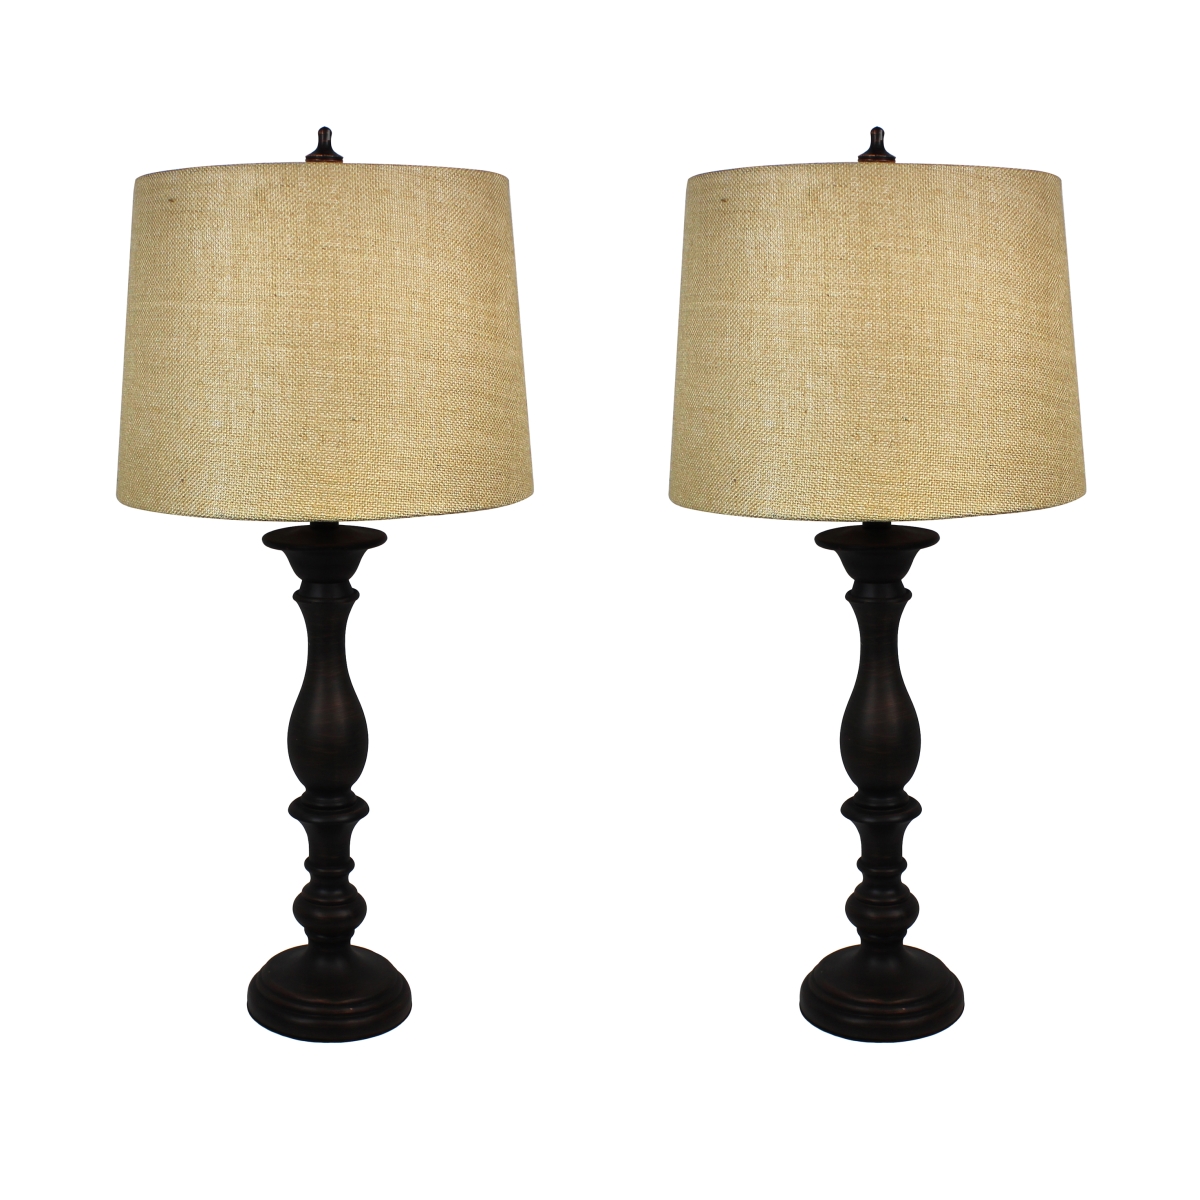 Urban Designs 7713379 Malibu Vista Candlestick Table Lamp With Burlap Shade - Set Of 2